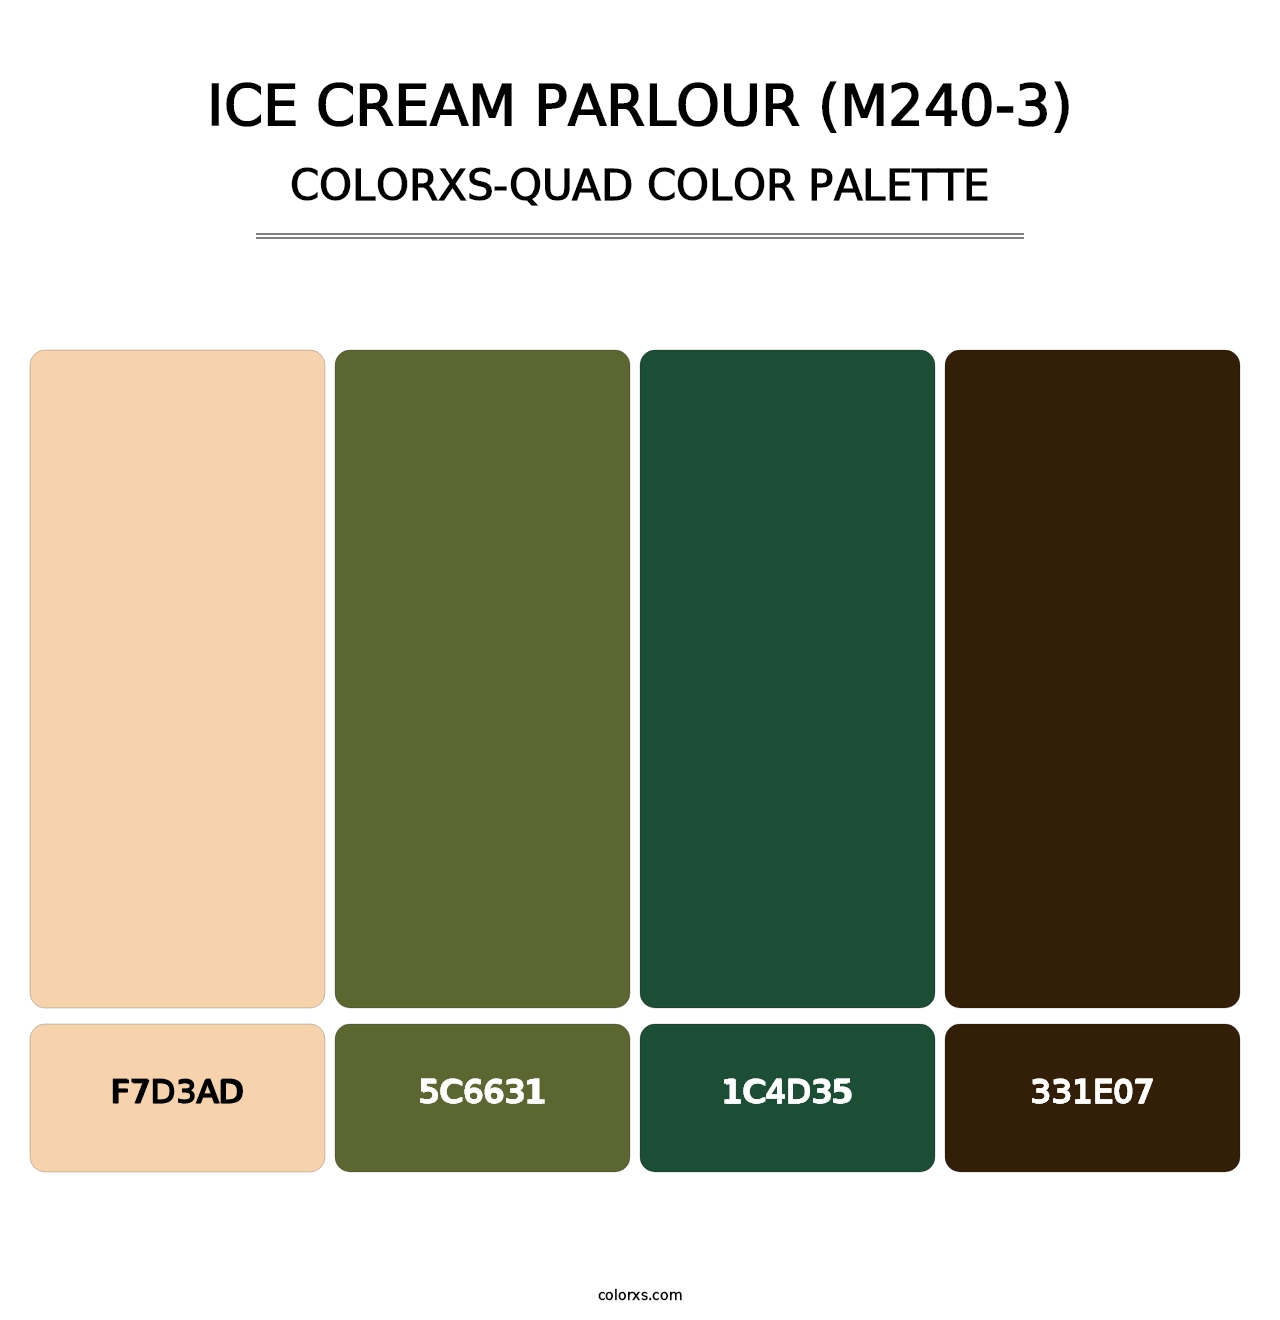 Ice Cream Parlour (M240-3) - Colorxs Quad Palette